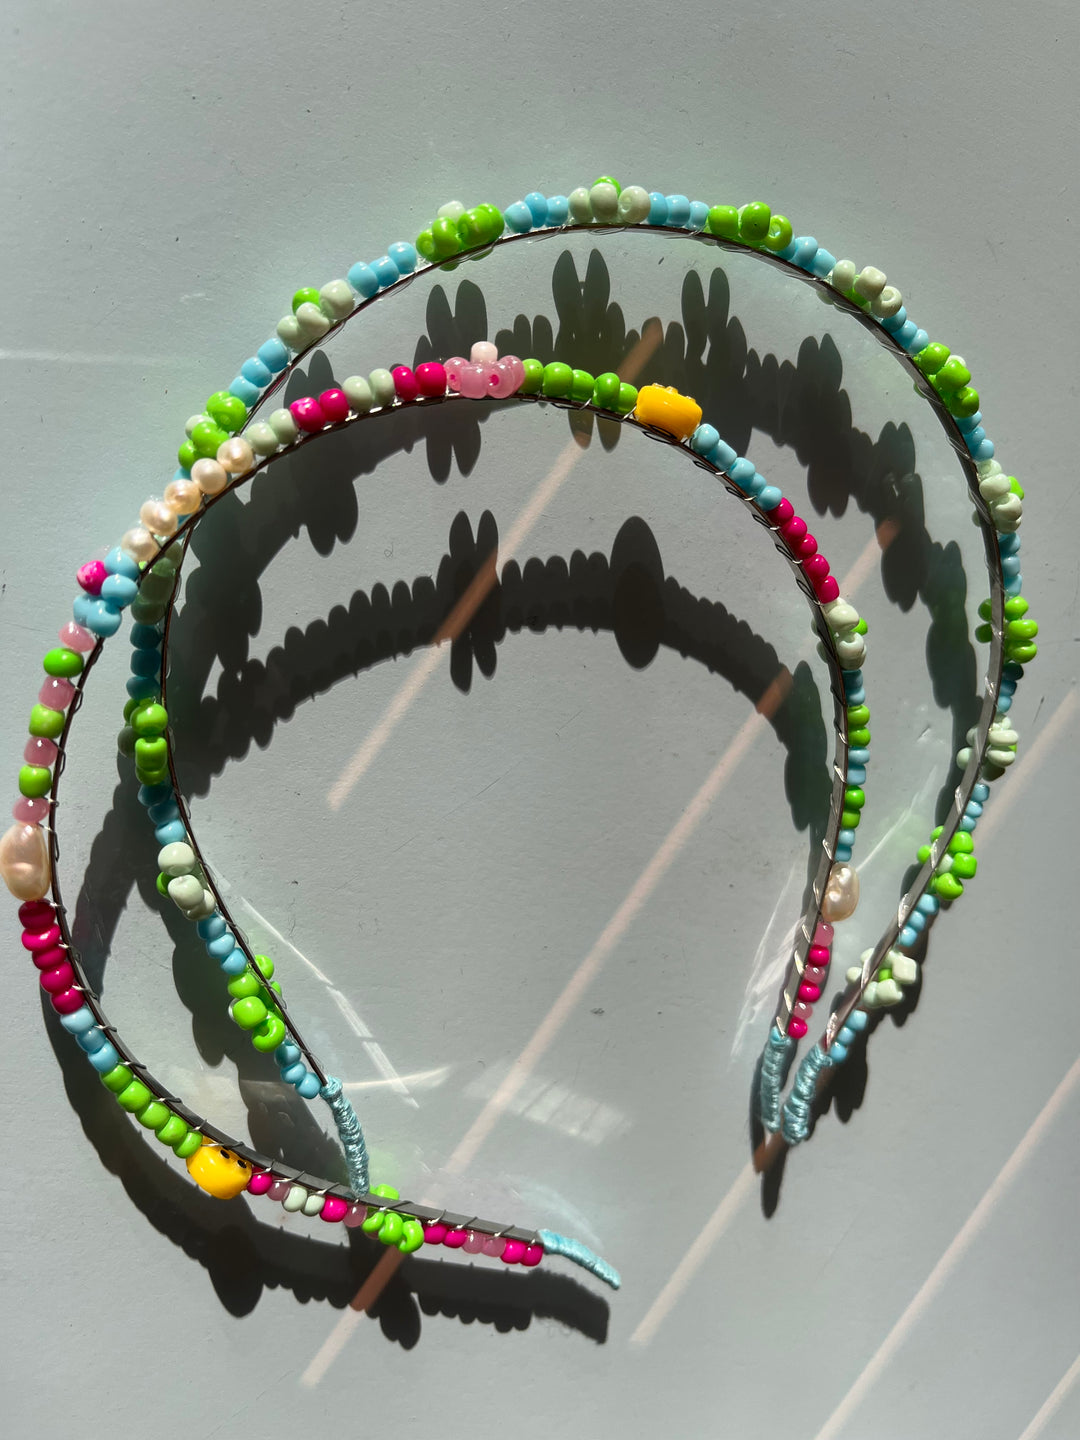 Twentyseven Toronto - Heirloom Hats Green Flowers & Glass Beads Pellet Beaded Headband